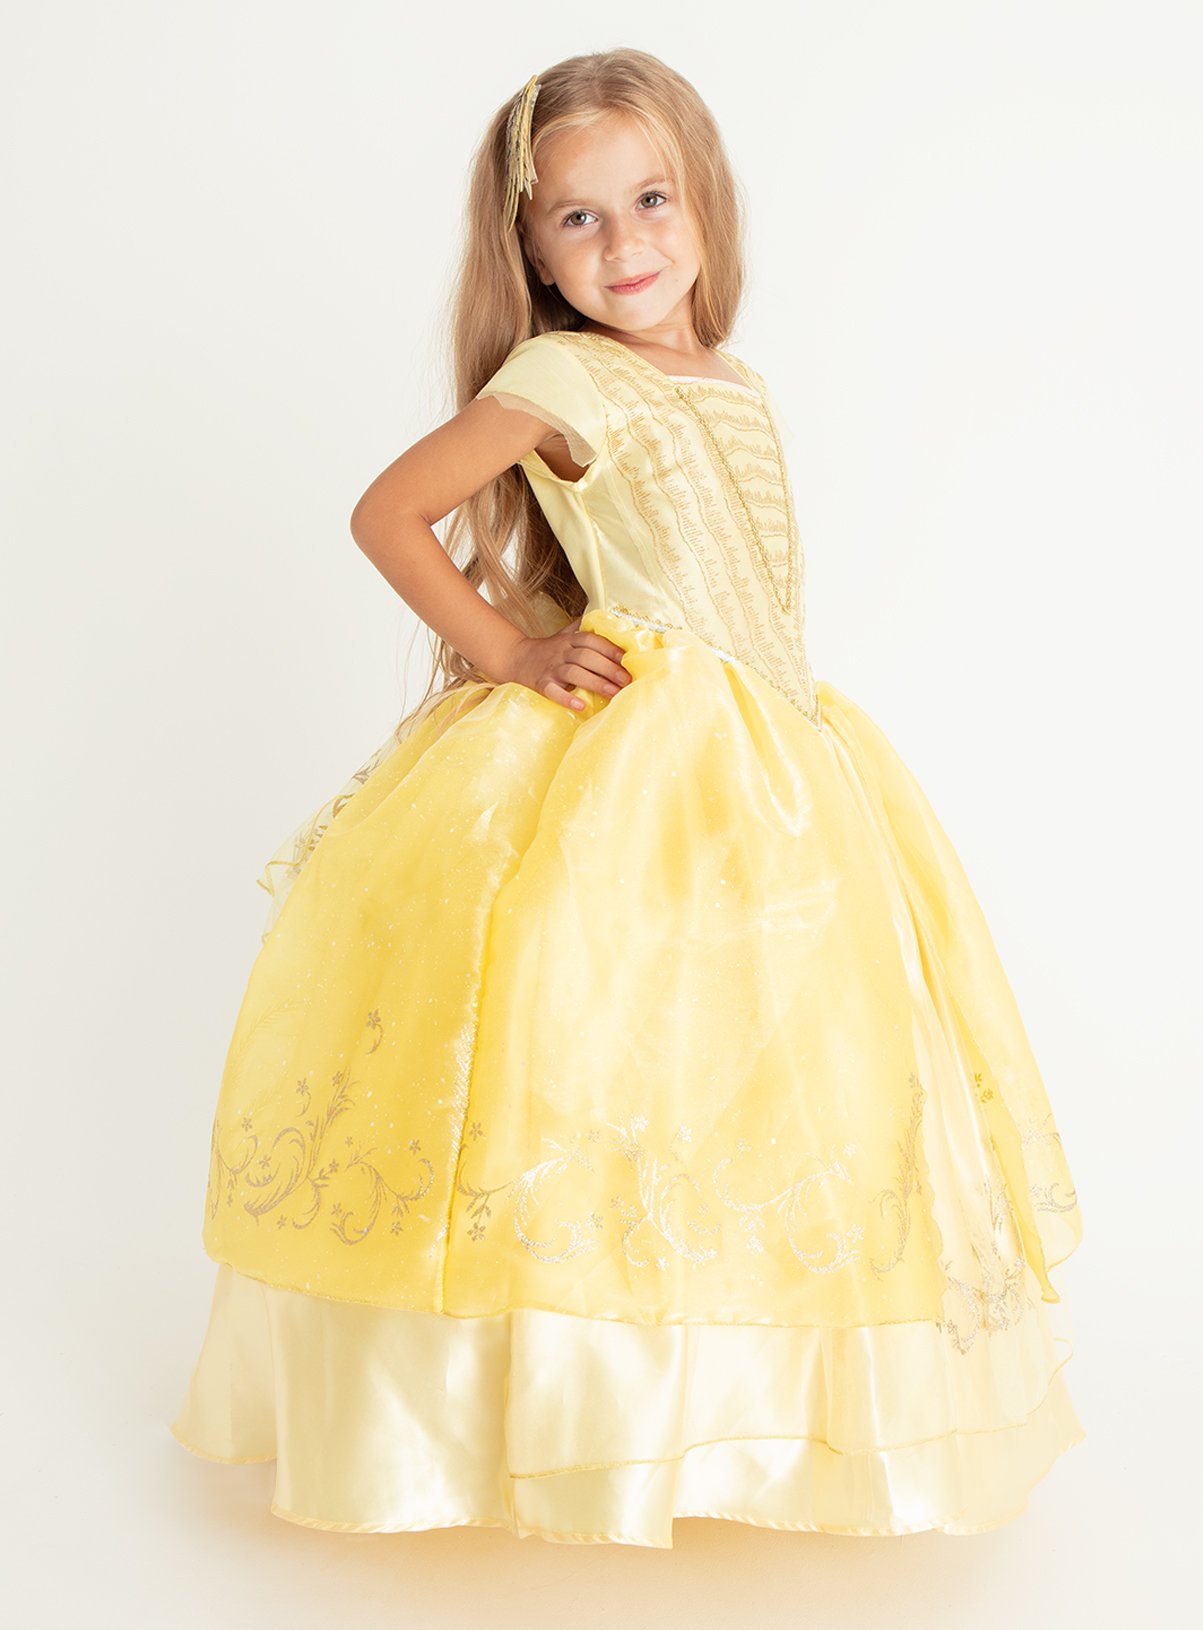 Disney Princess Belle Yellow Costume Review